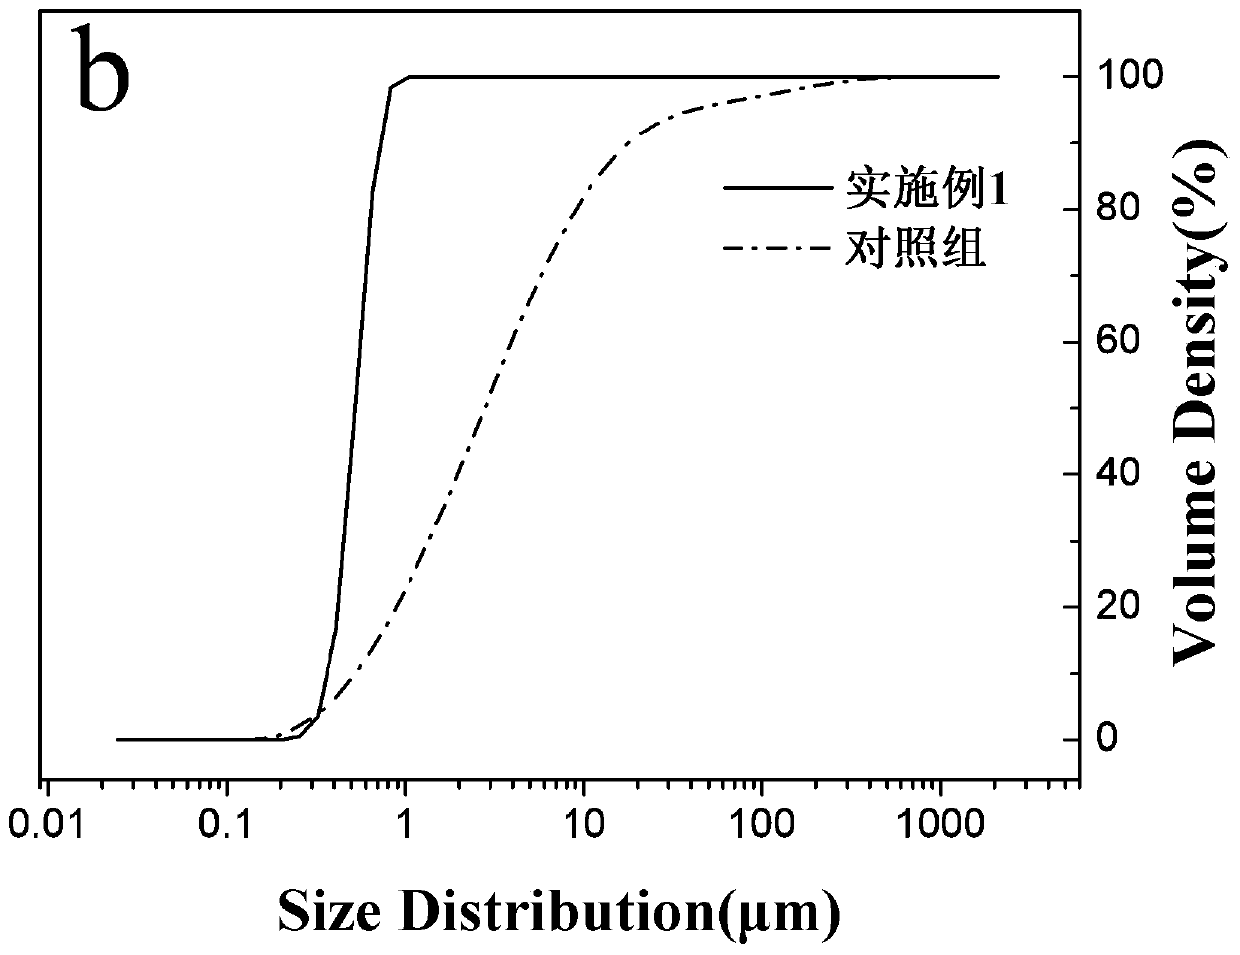 Alkali metal doped garnet type lithium lanthanum zirconium oxide powder and preparation method thereof